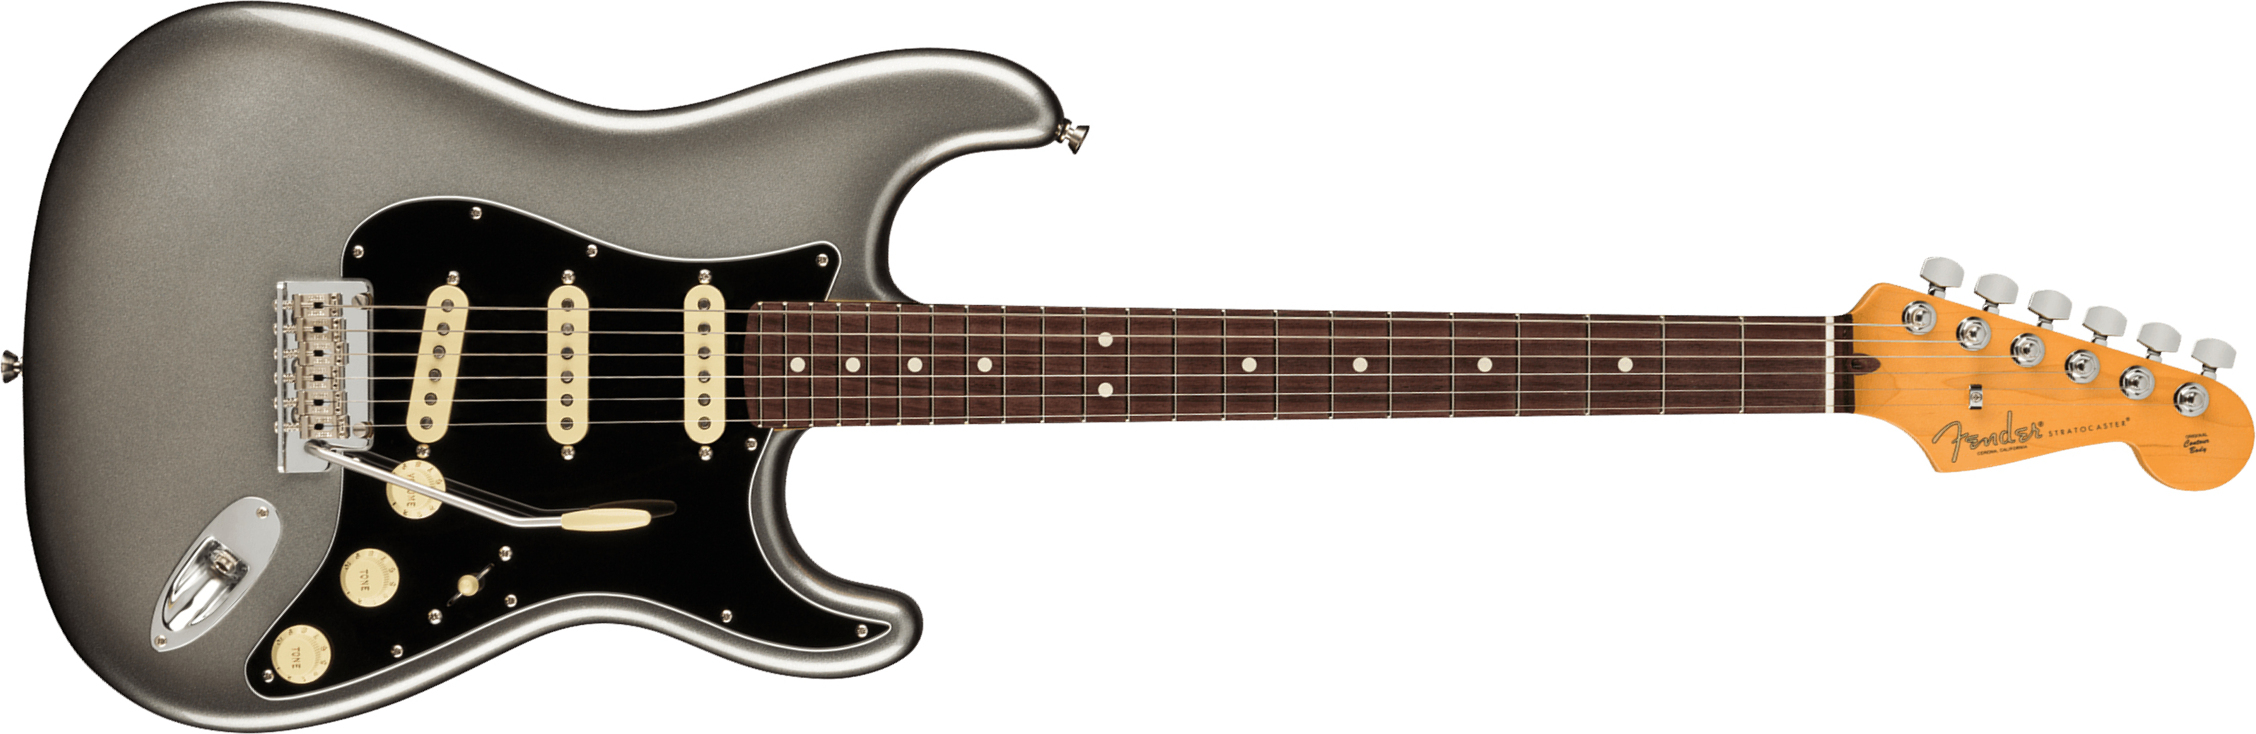 Fender Strat American Professional Ii Usa Rw - Mercury - Str shape electric guitar - Main picture